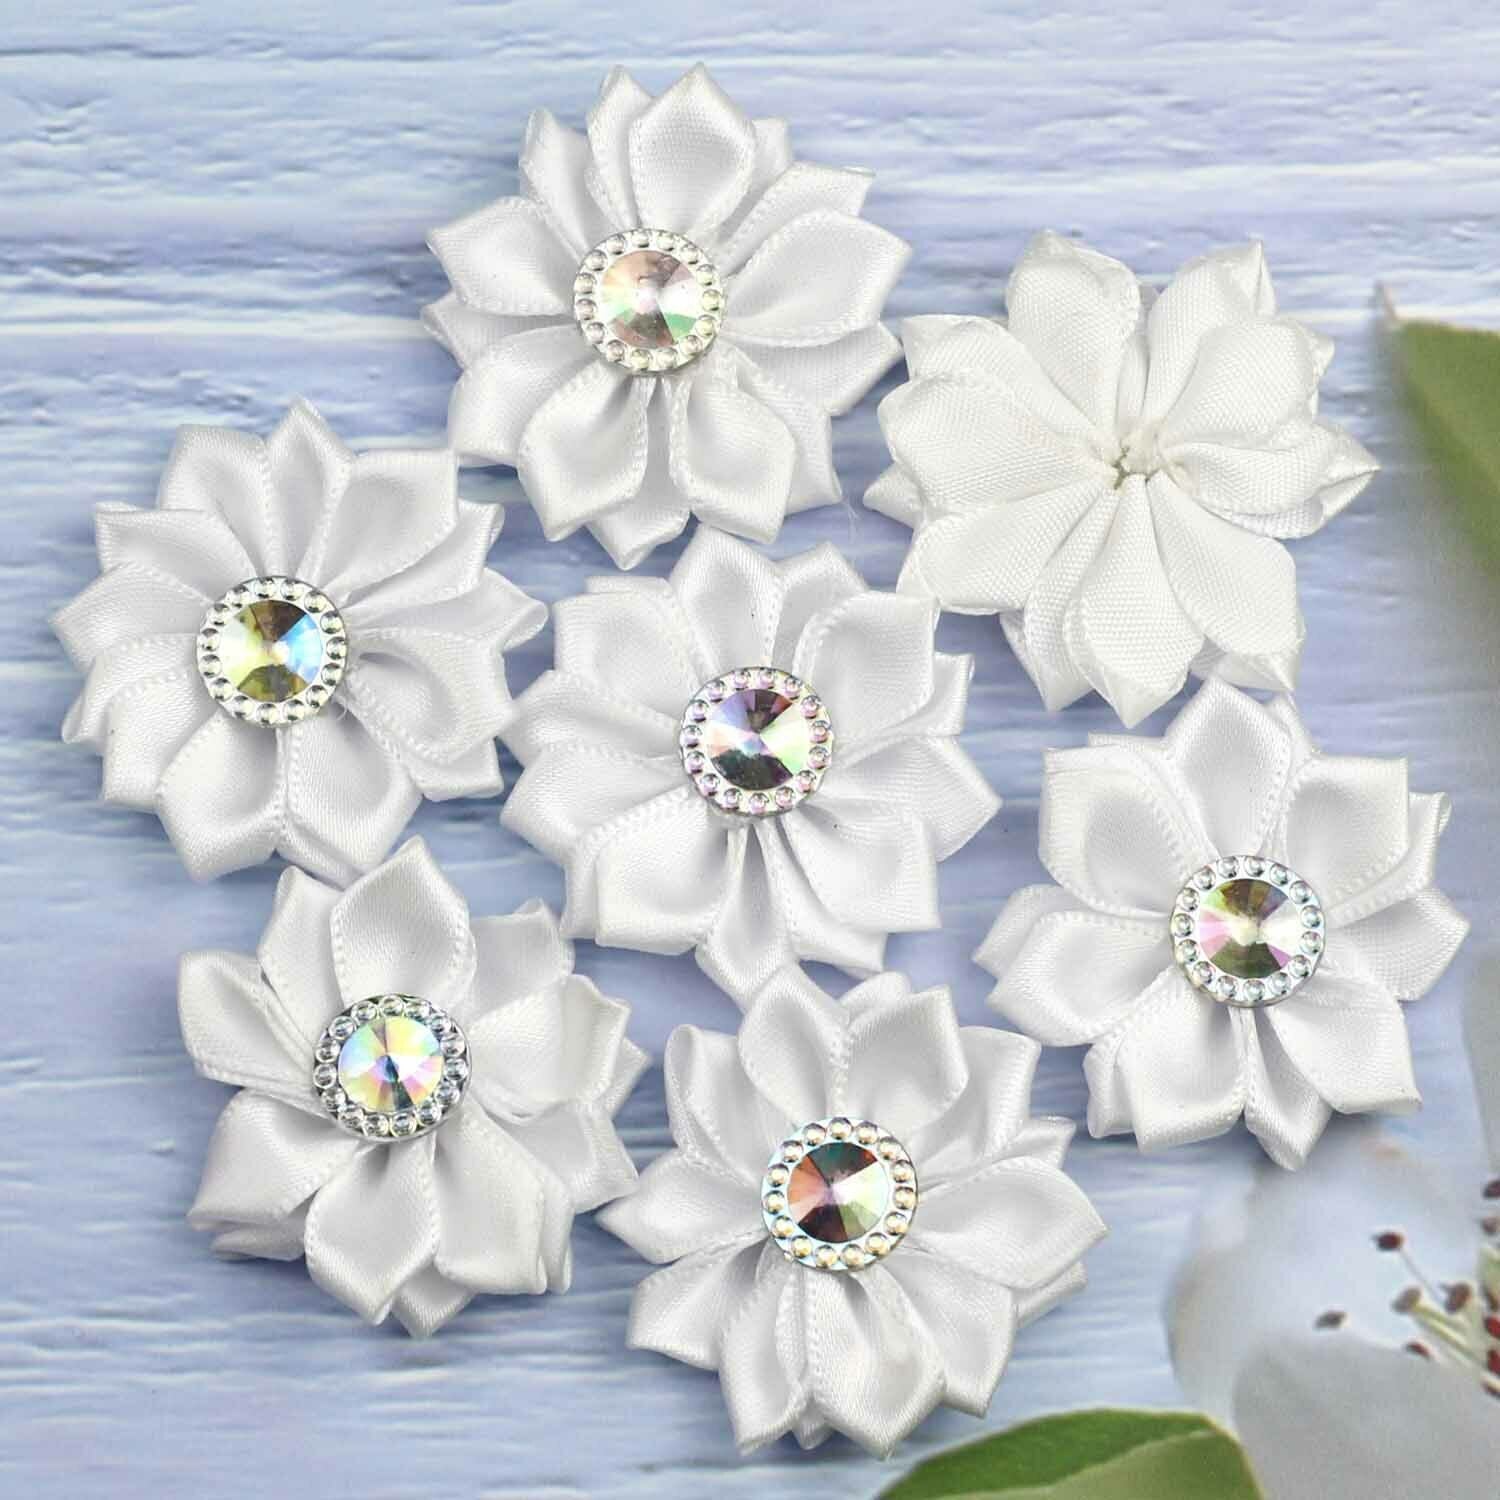 1.5" 10Pcs White Satin w/Rhinestone Flowers Ribbons Appliques Craft Supplies